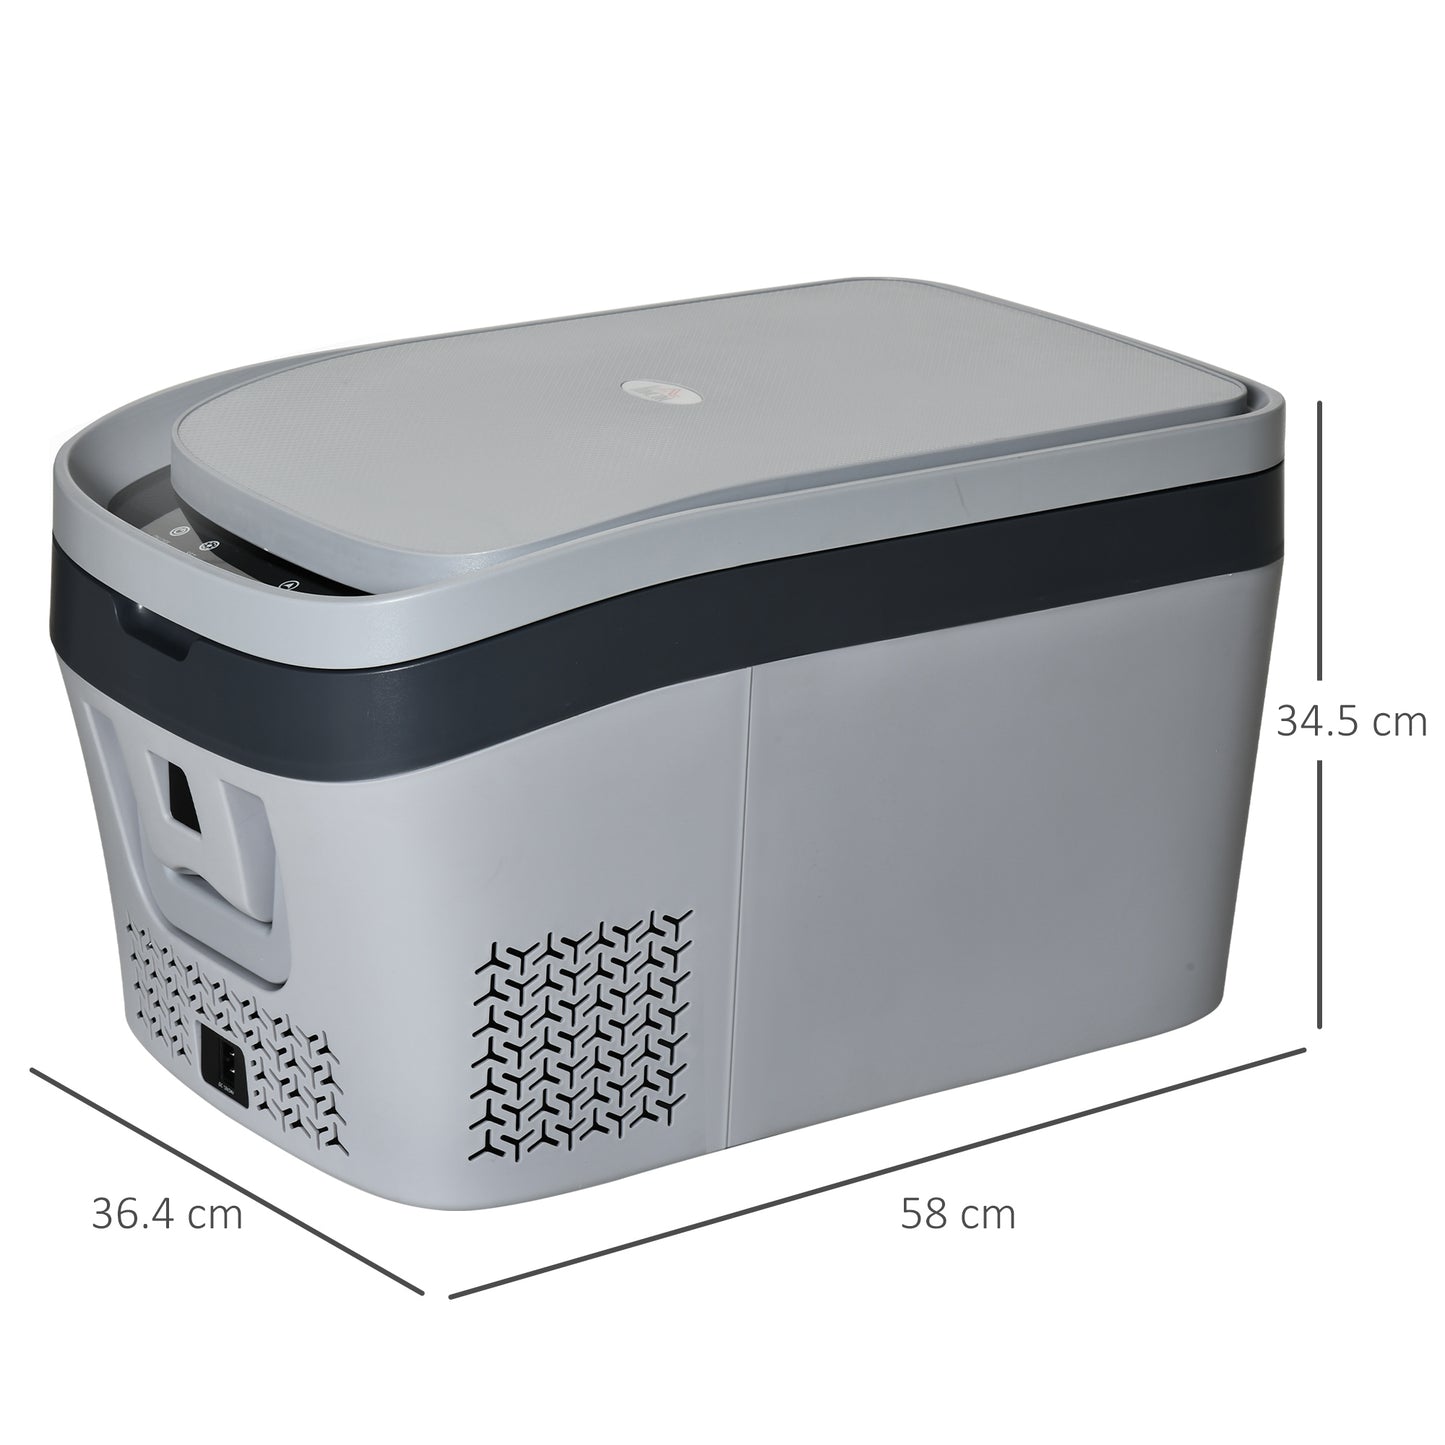 HOMCOM 12 Volt Car Refrigerator, 24L Portable Compressor Cooler, Mini Fridge Freezer for Car, Cool Box, Cooler, RV, Camping and Home Use, -18-20Â°C